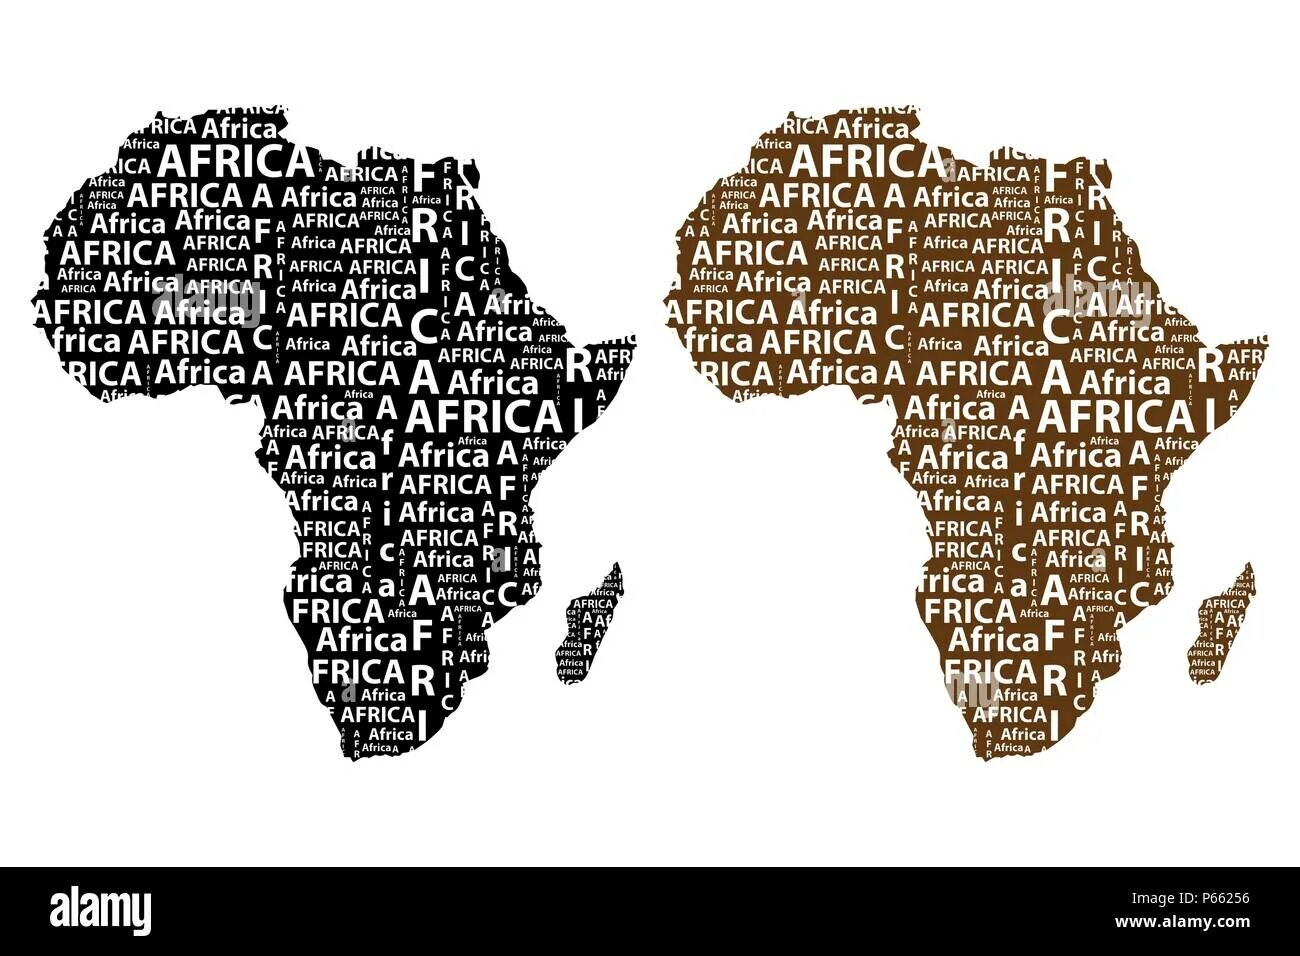 Africa text. Африканские слова. Африка текст. Африканский язык слова. Популярные африканские слова.